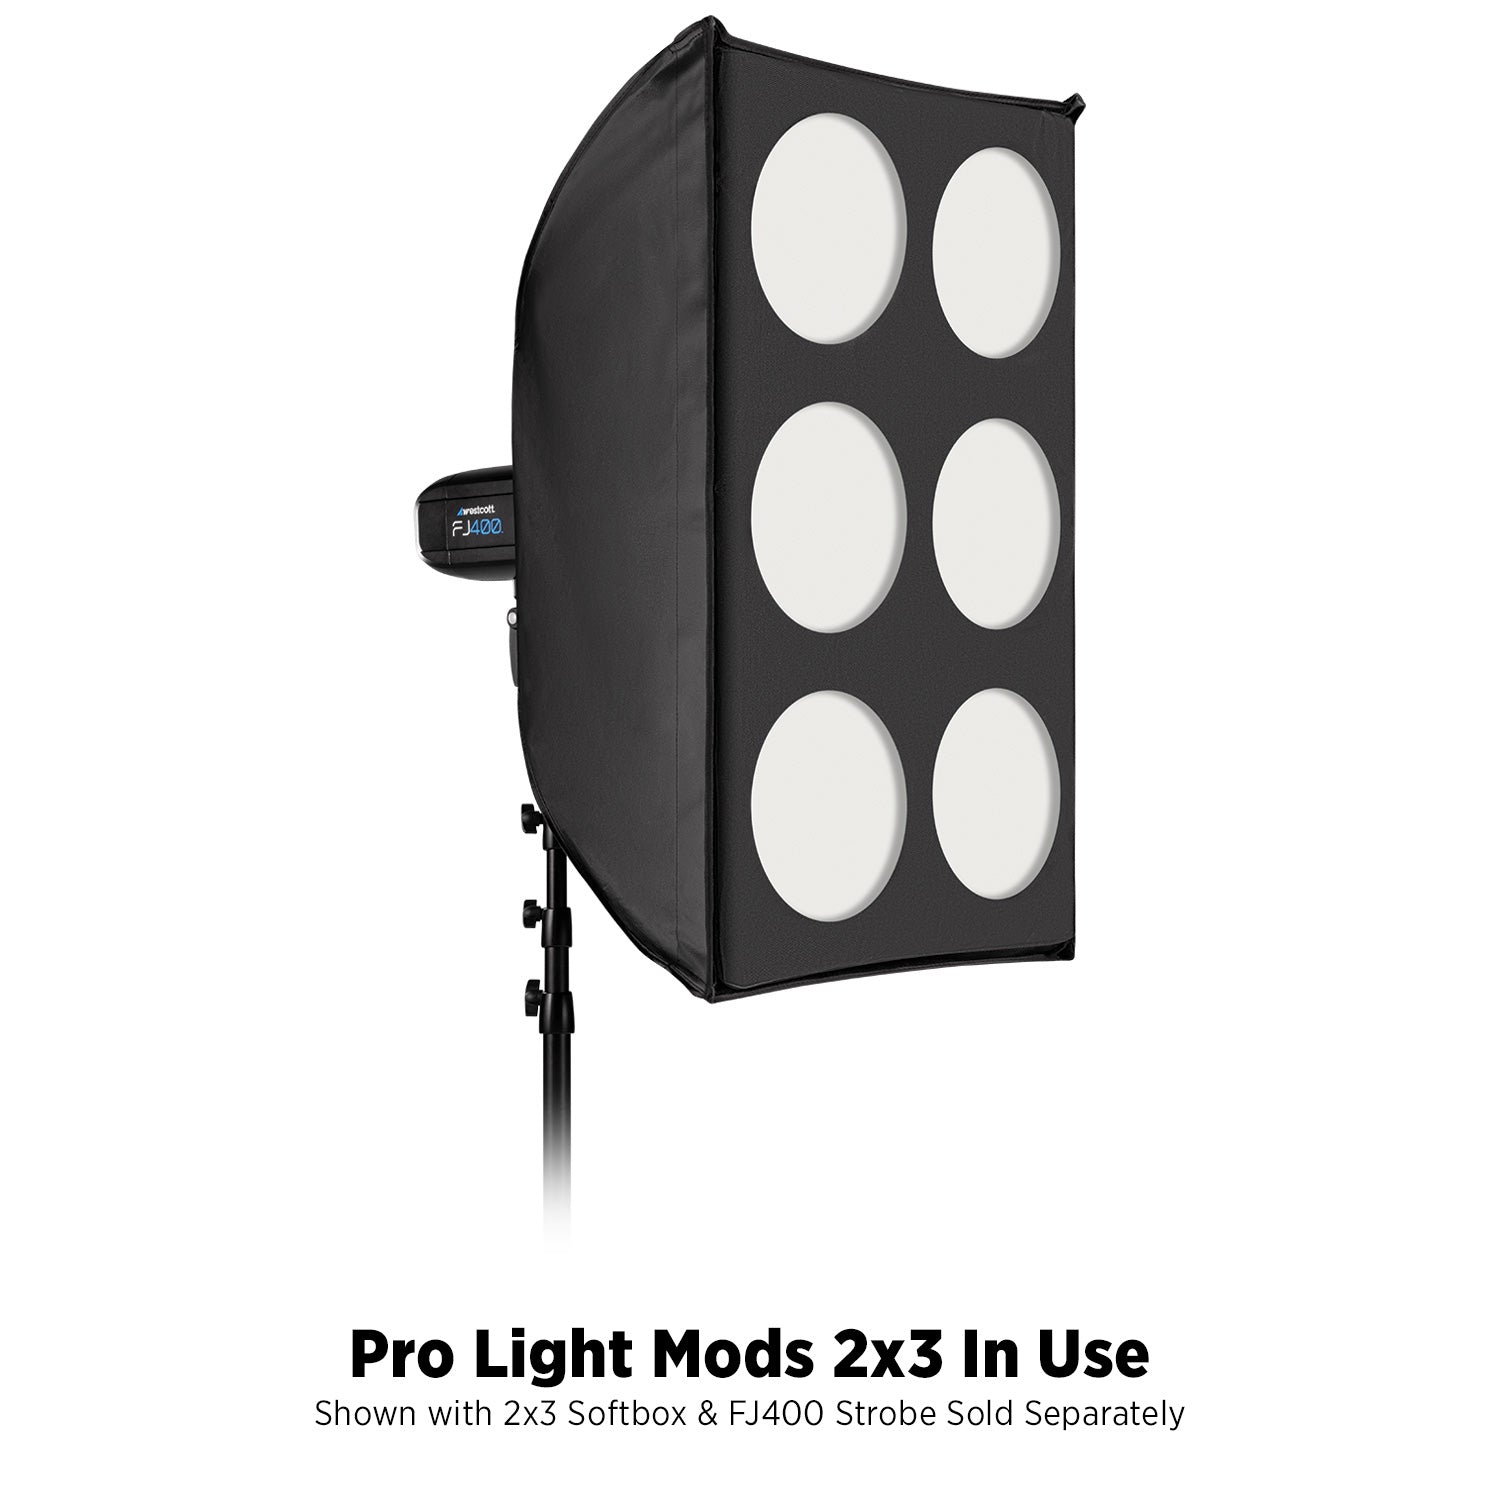 Pro Light Mods 2x3